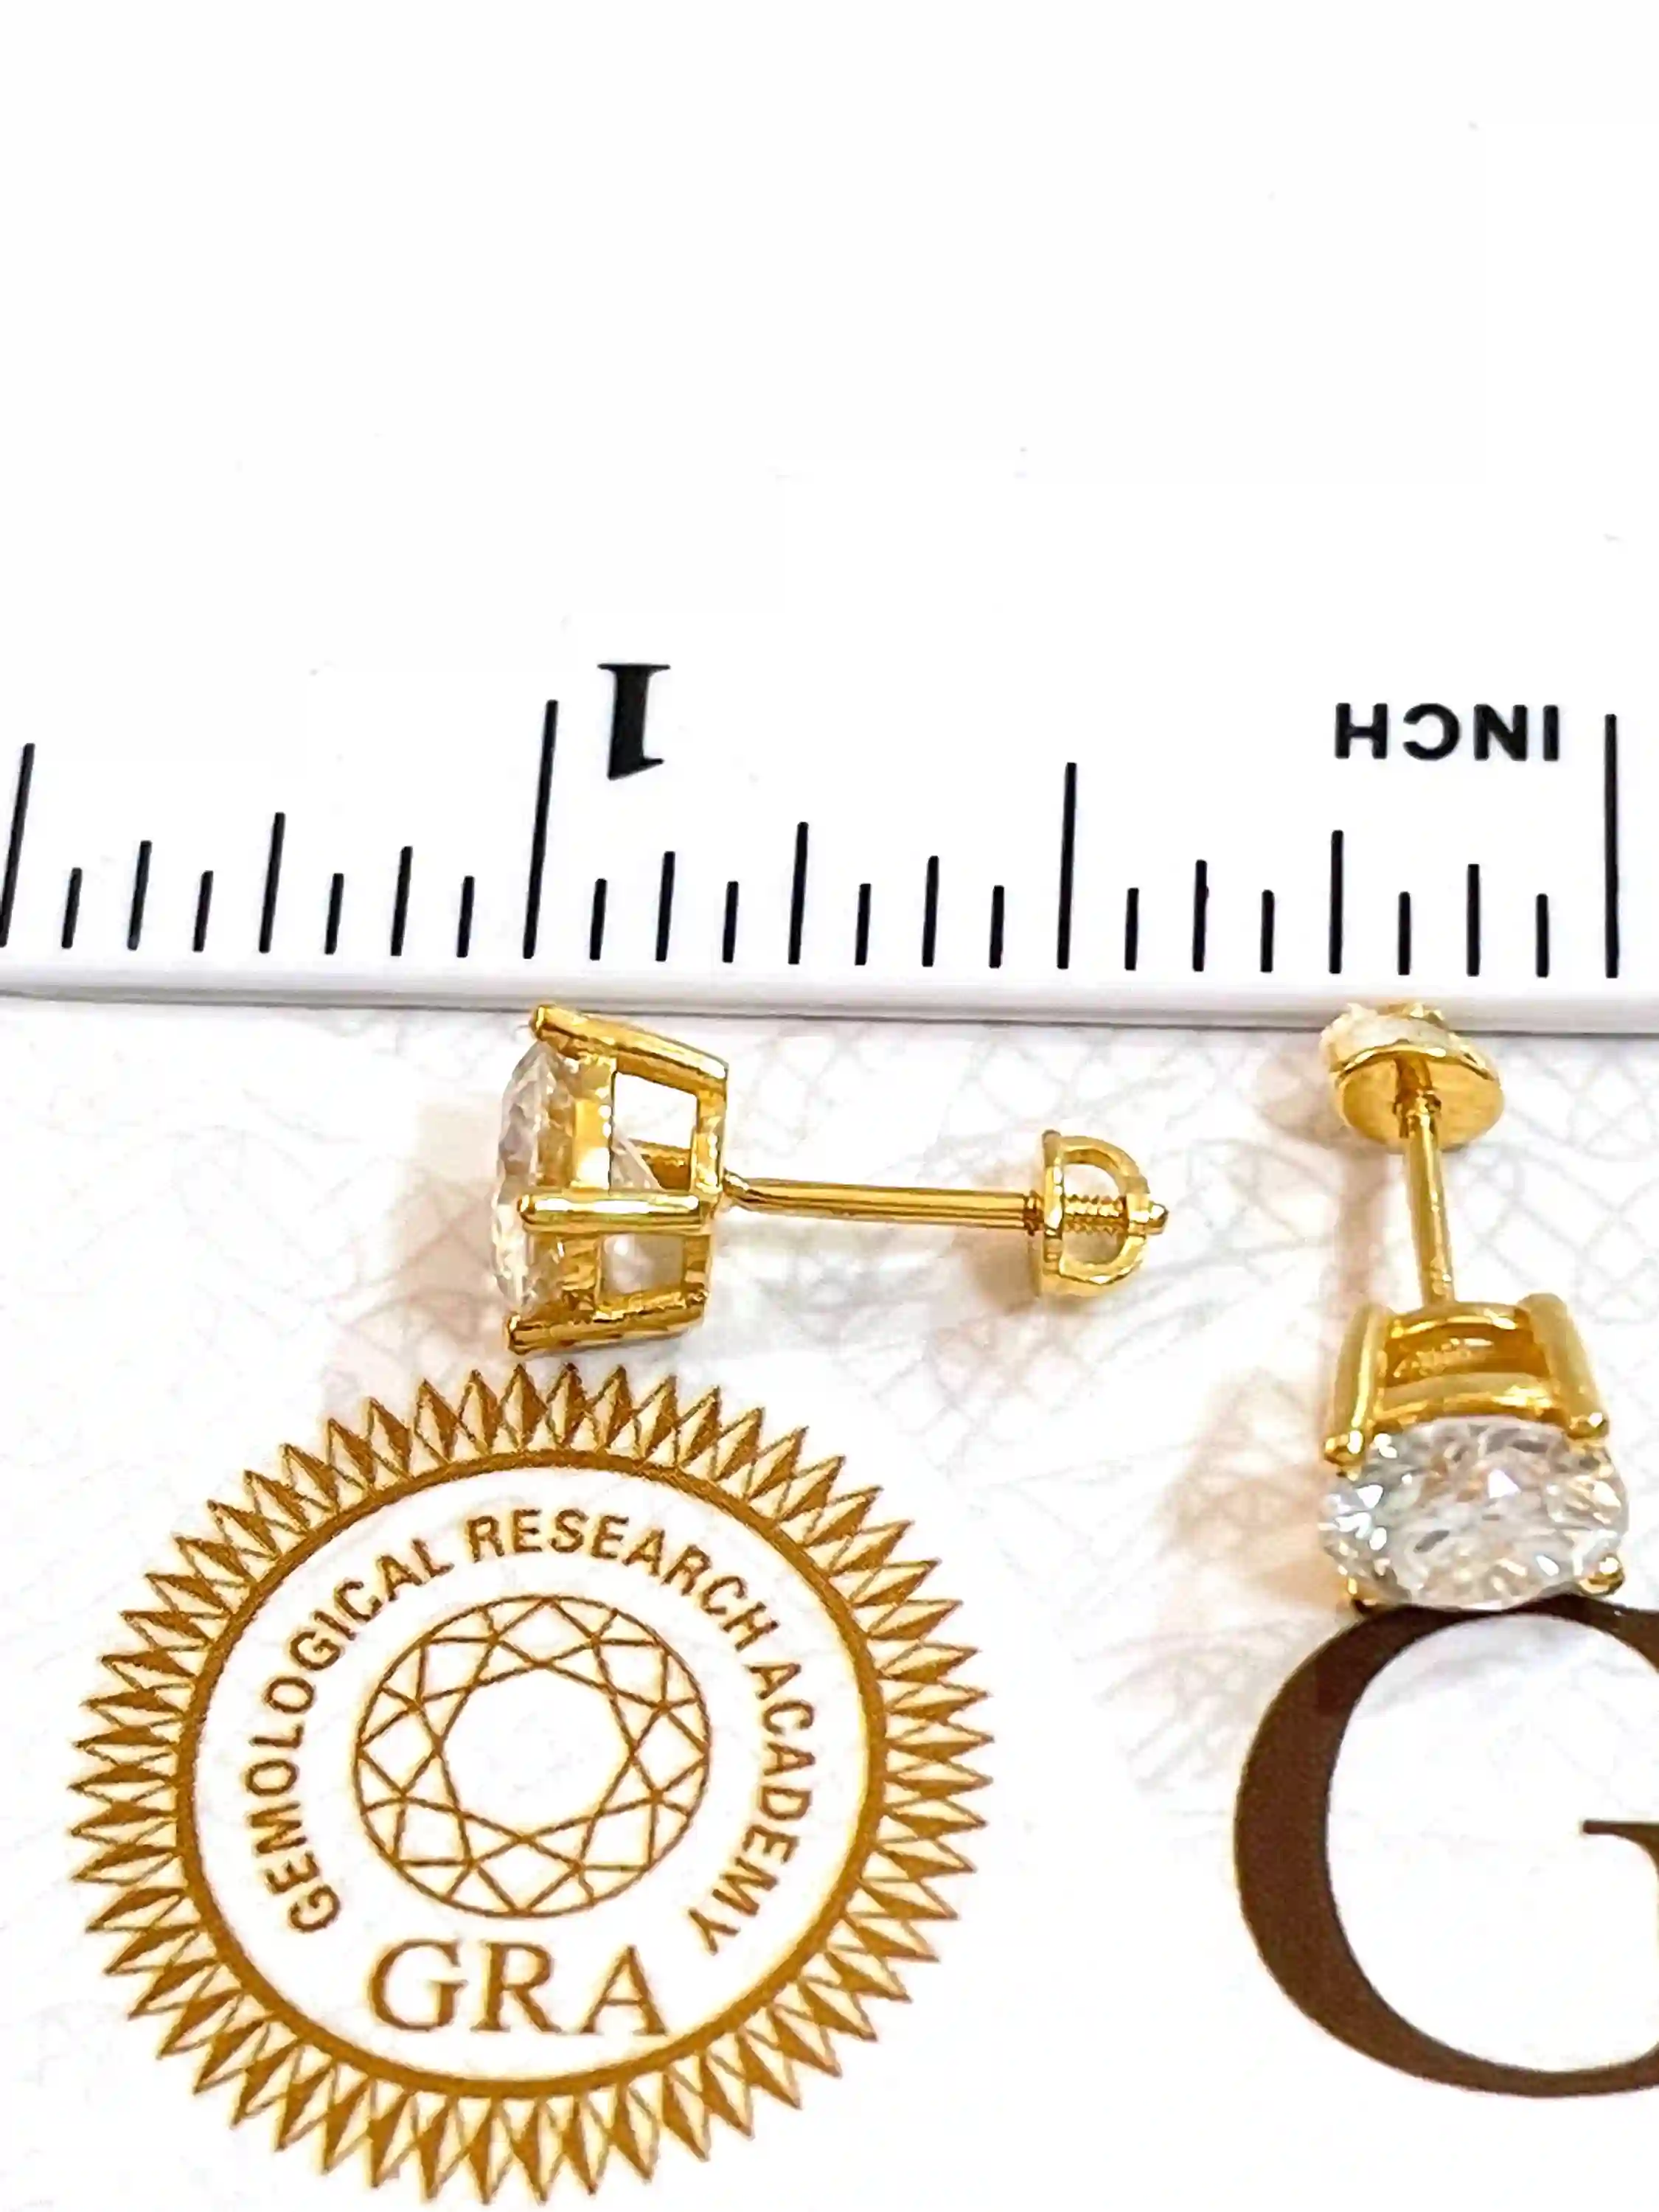 2 carat Diamond Earrings - SOLID 18k Gold Jewelry - Certified Diamond Earrings - Wedding Earrings - Stud Earrings - 2 carat Stud Solitaire 